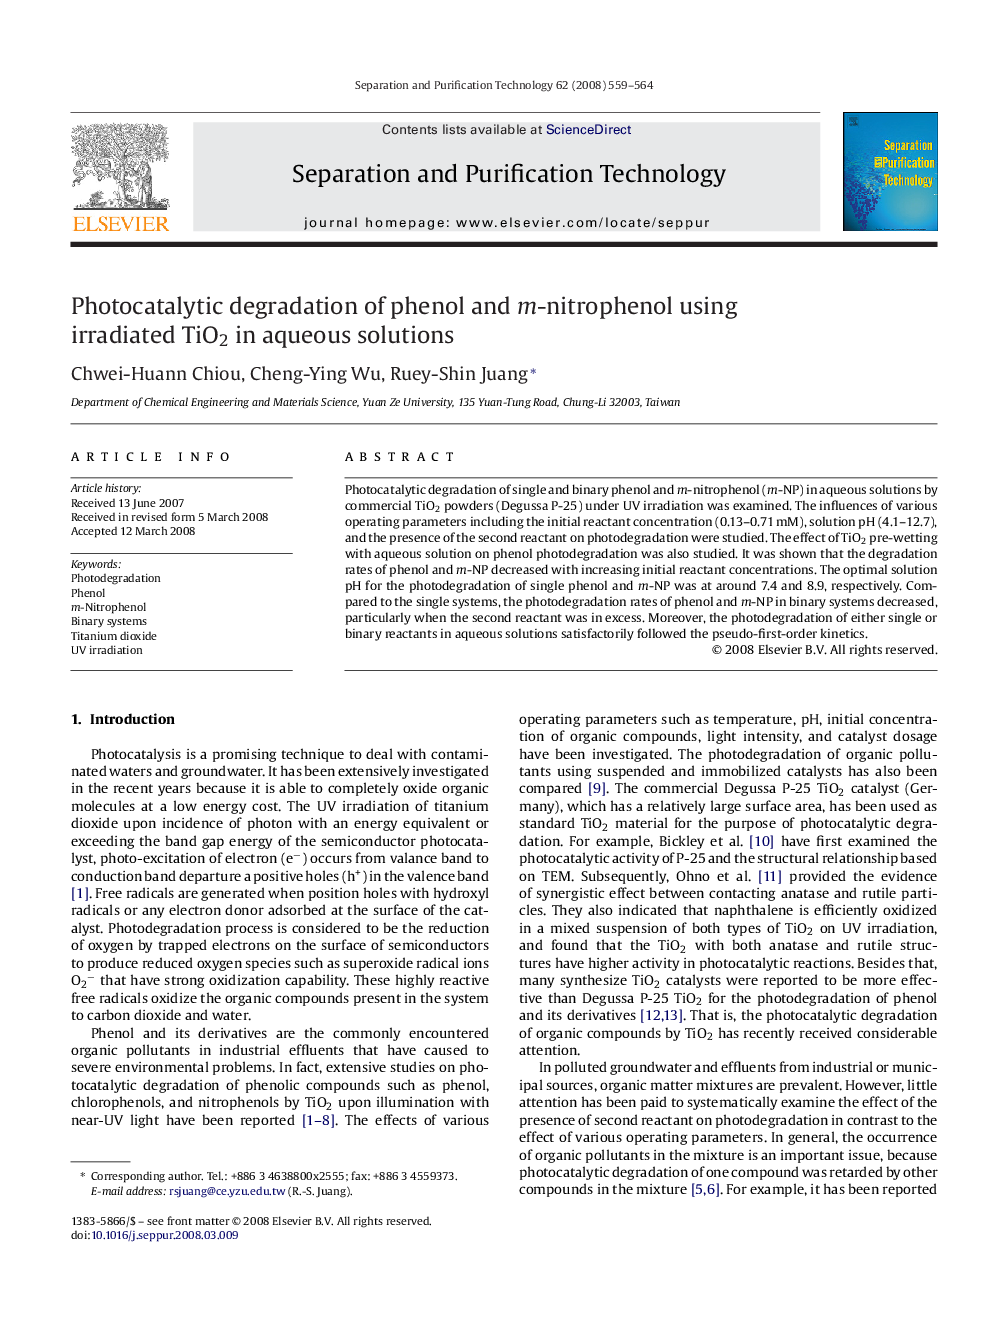 Photocatalytic degradation of phenol and m-nitrophenol using irradiated TiO2 in aqueous solutions